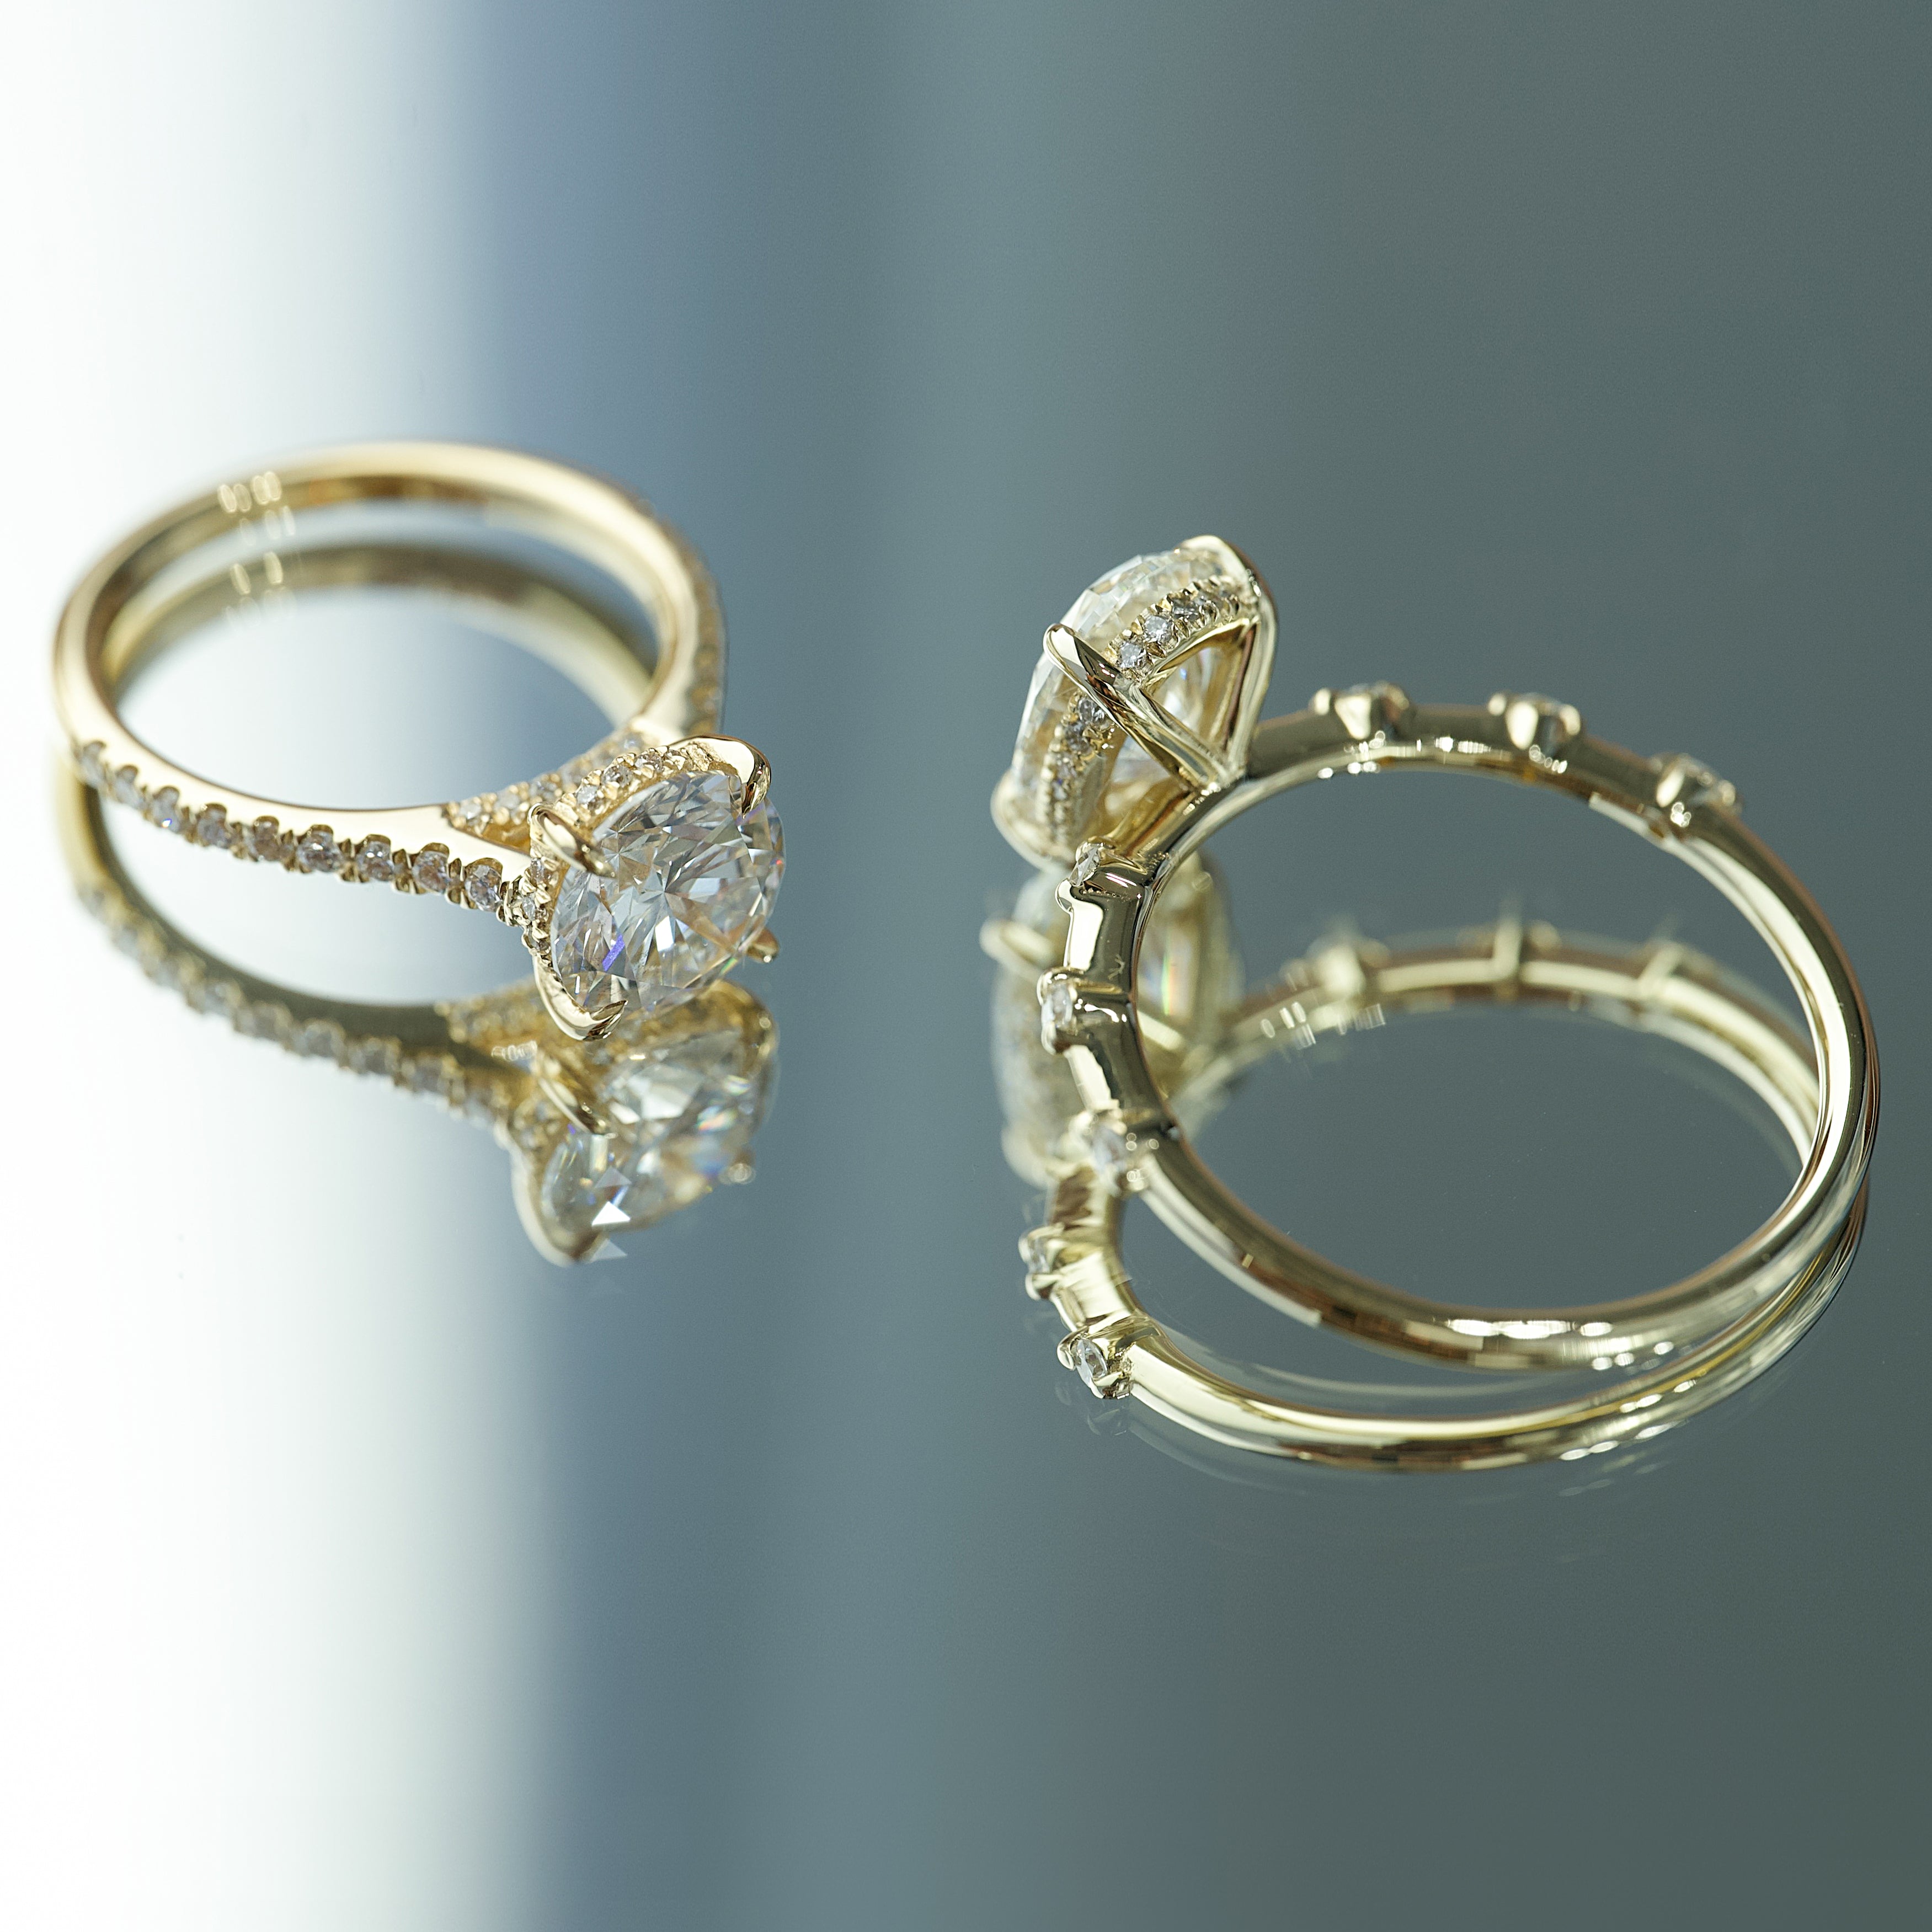 American Diamond Rings: Glamorous Gems for Your Fingers